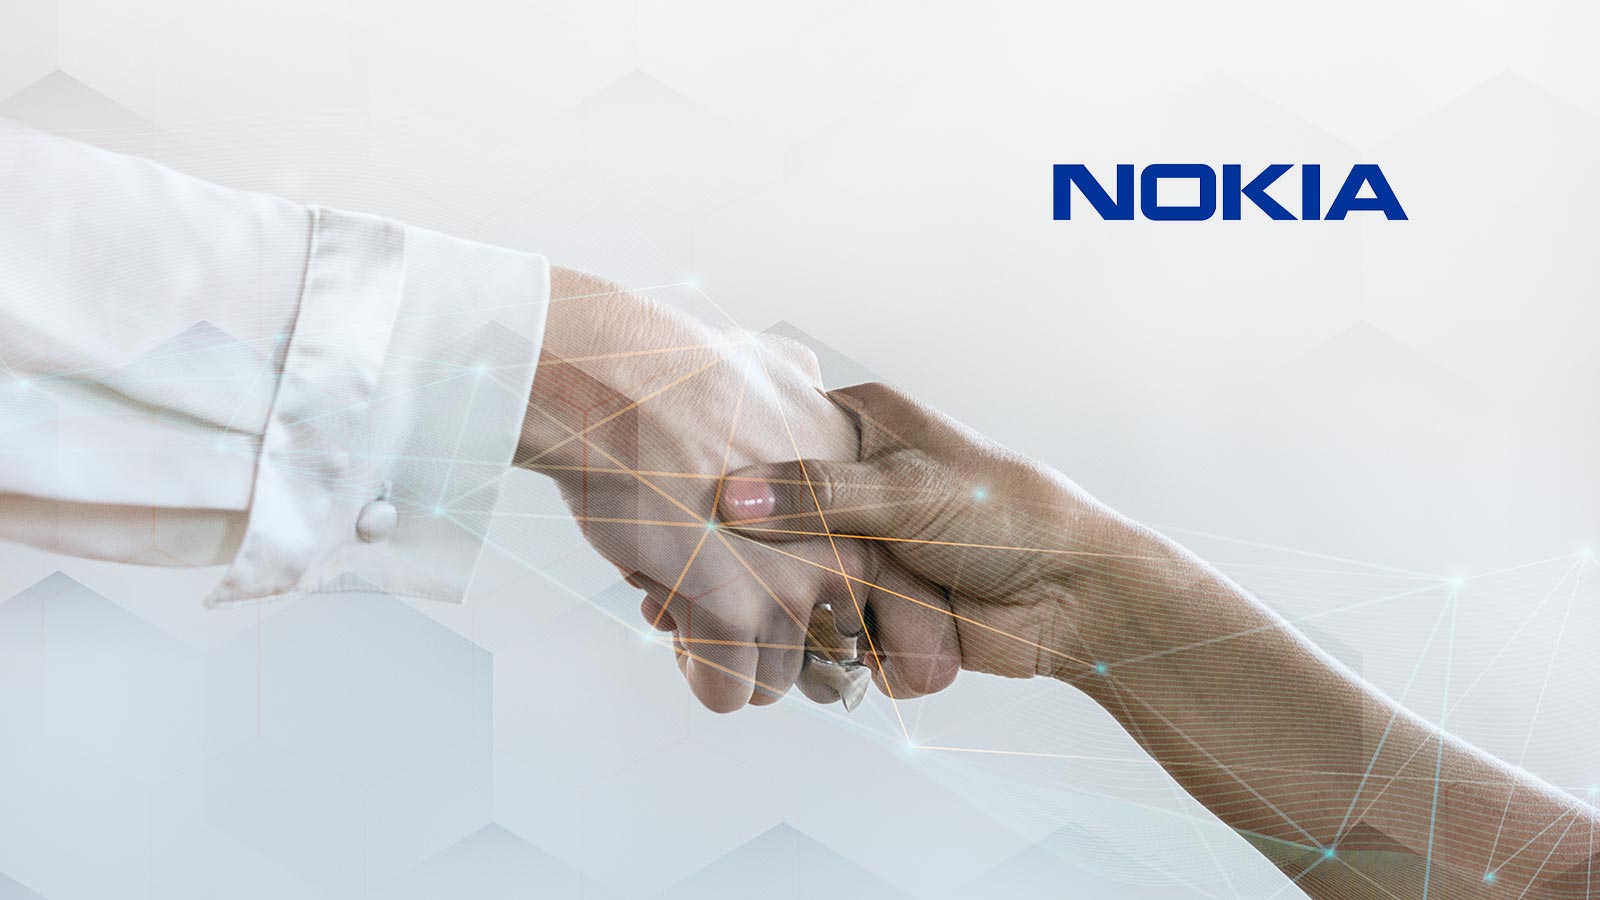 Nokia acquires Gainspeed - Startup Buzz